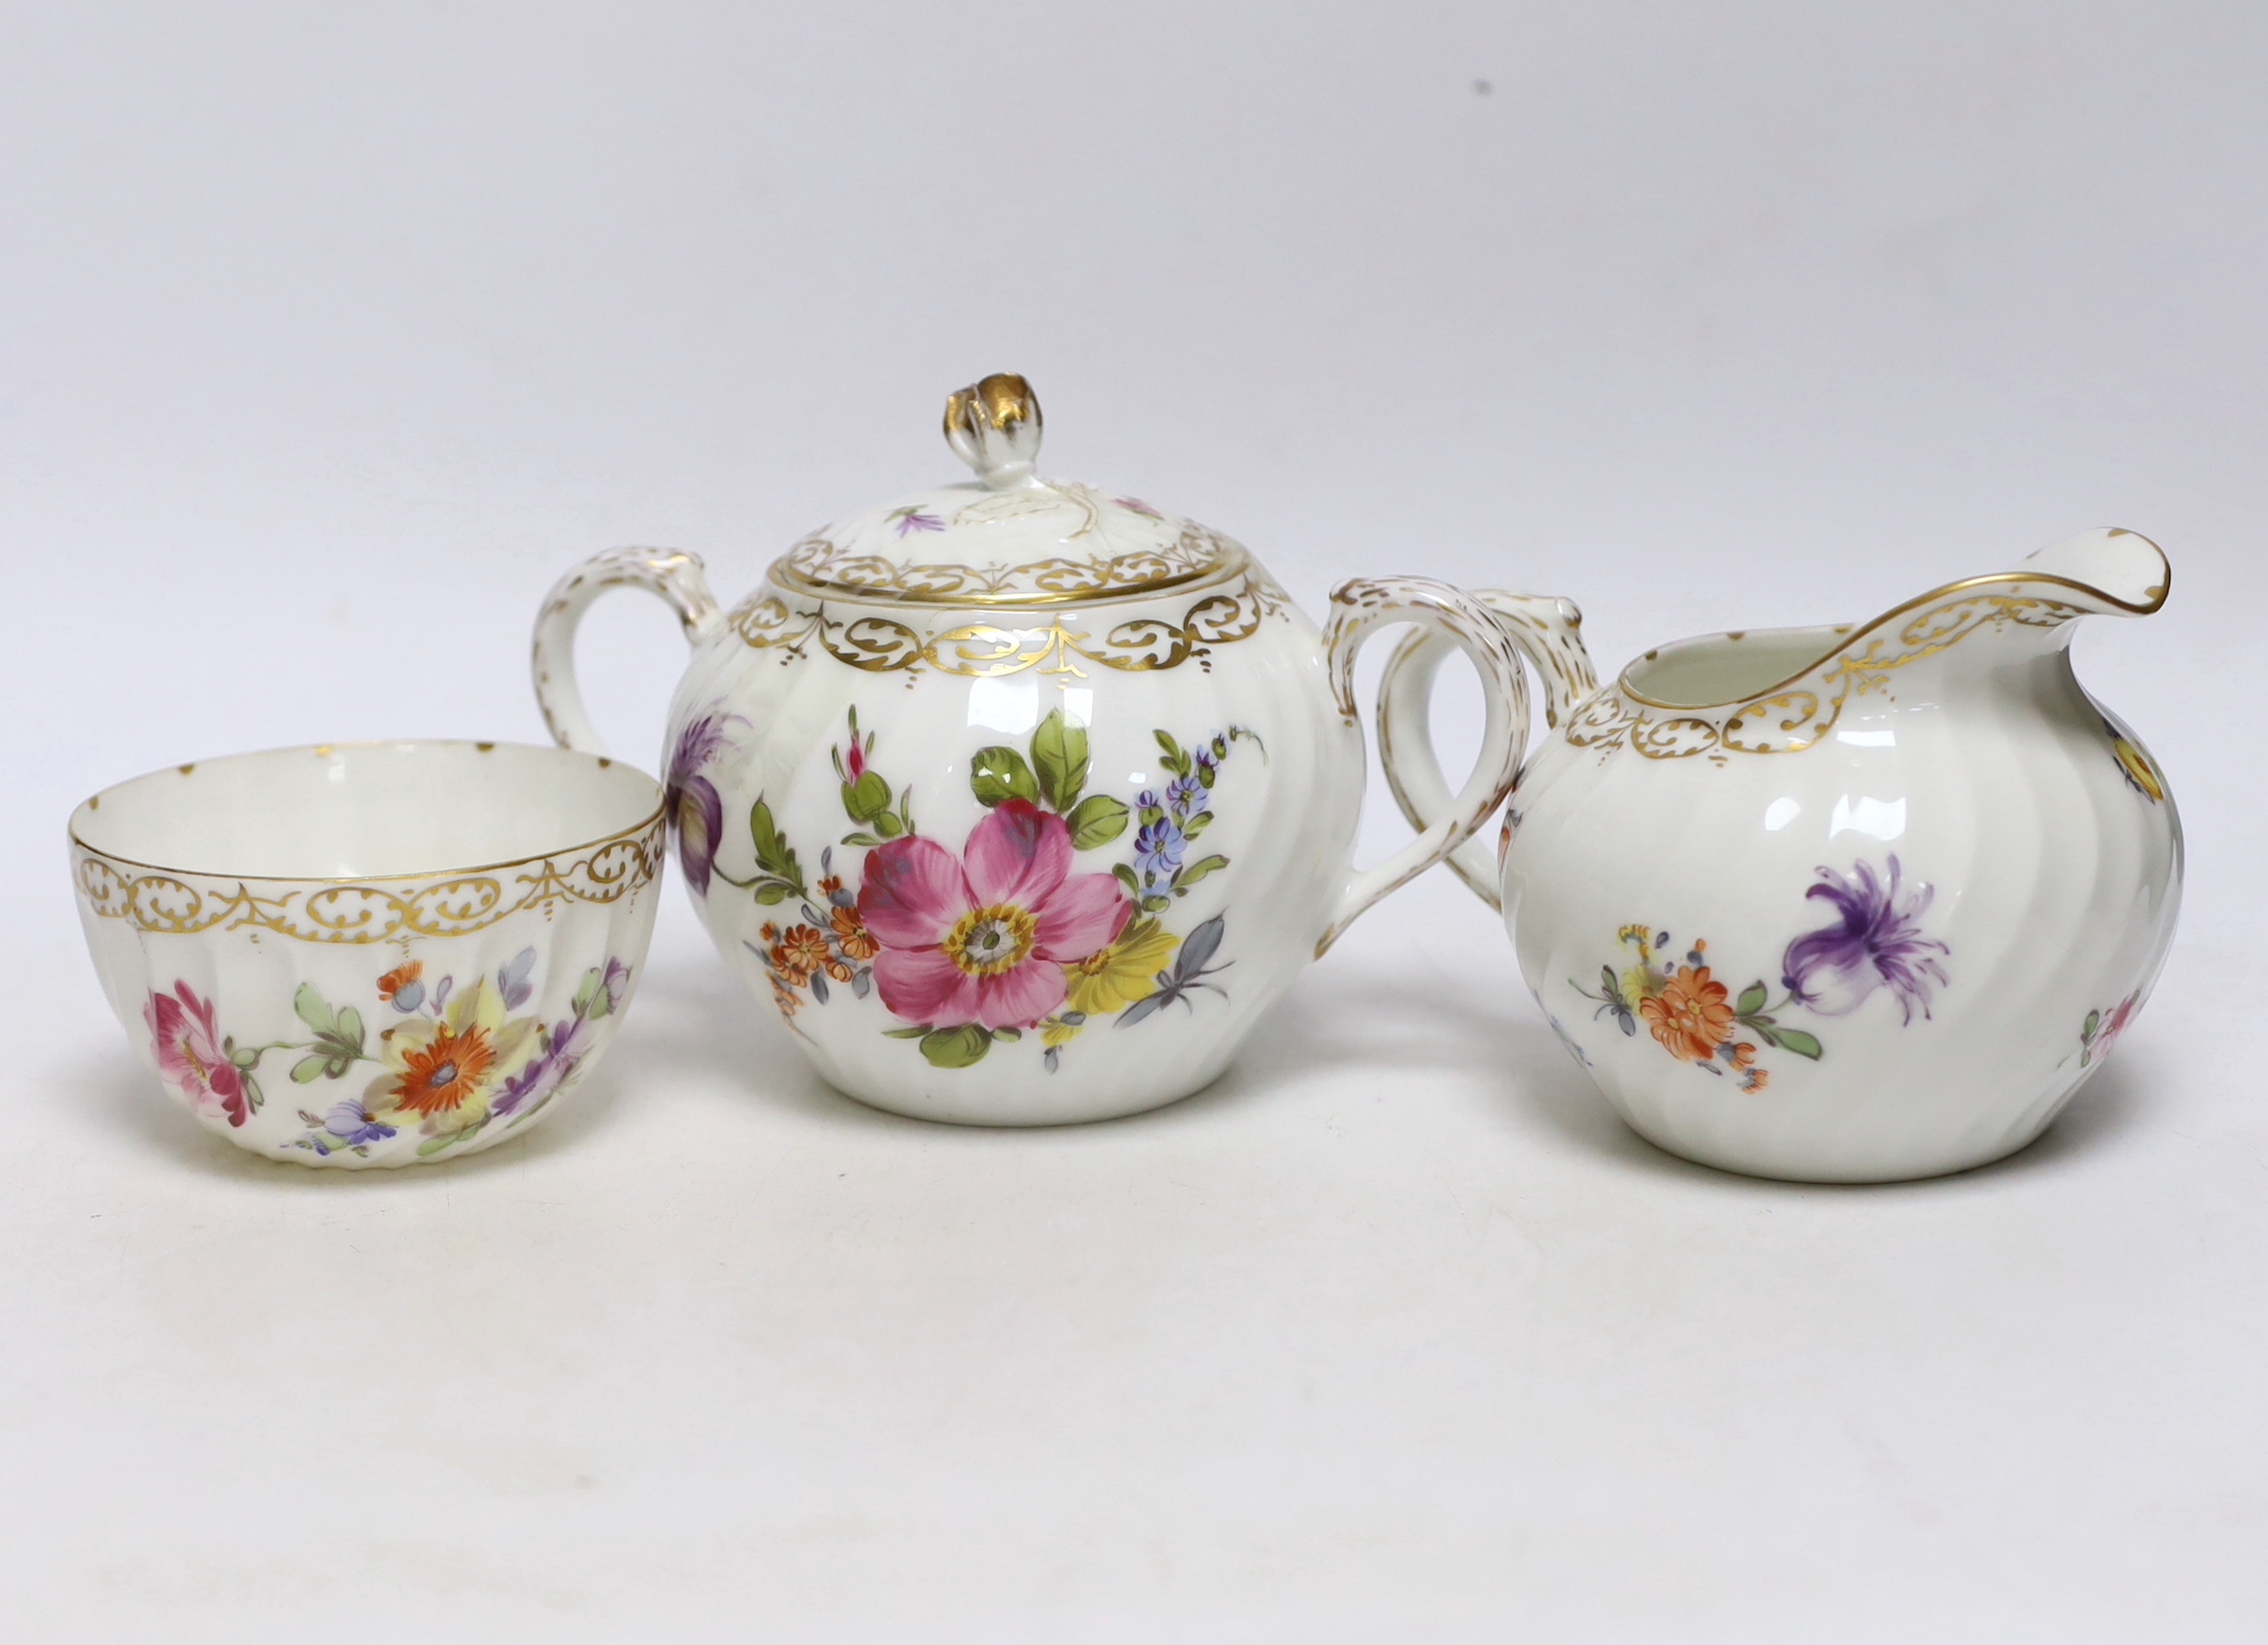 A Nymphenburg floral decorated teapot, milk jug and sugar bowl, teapot 13c high